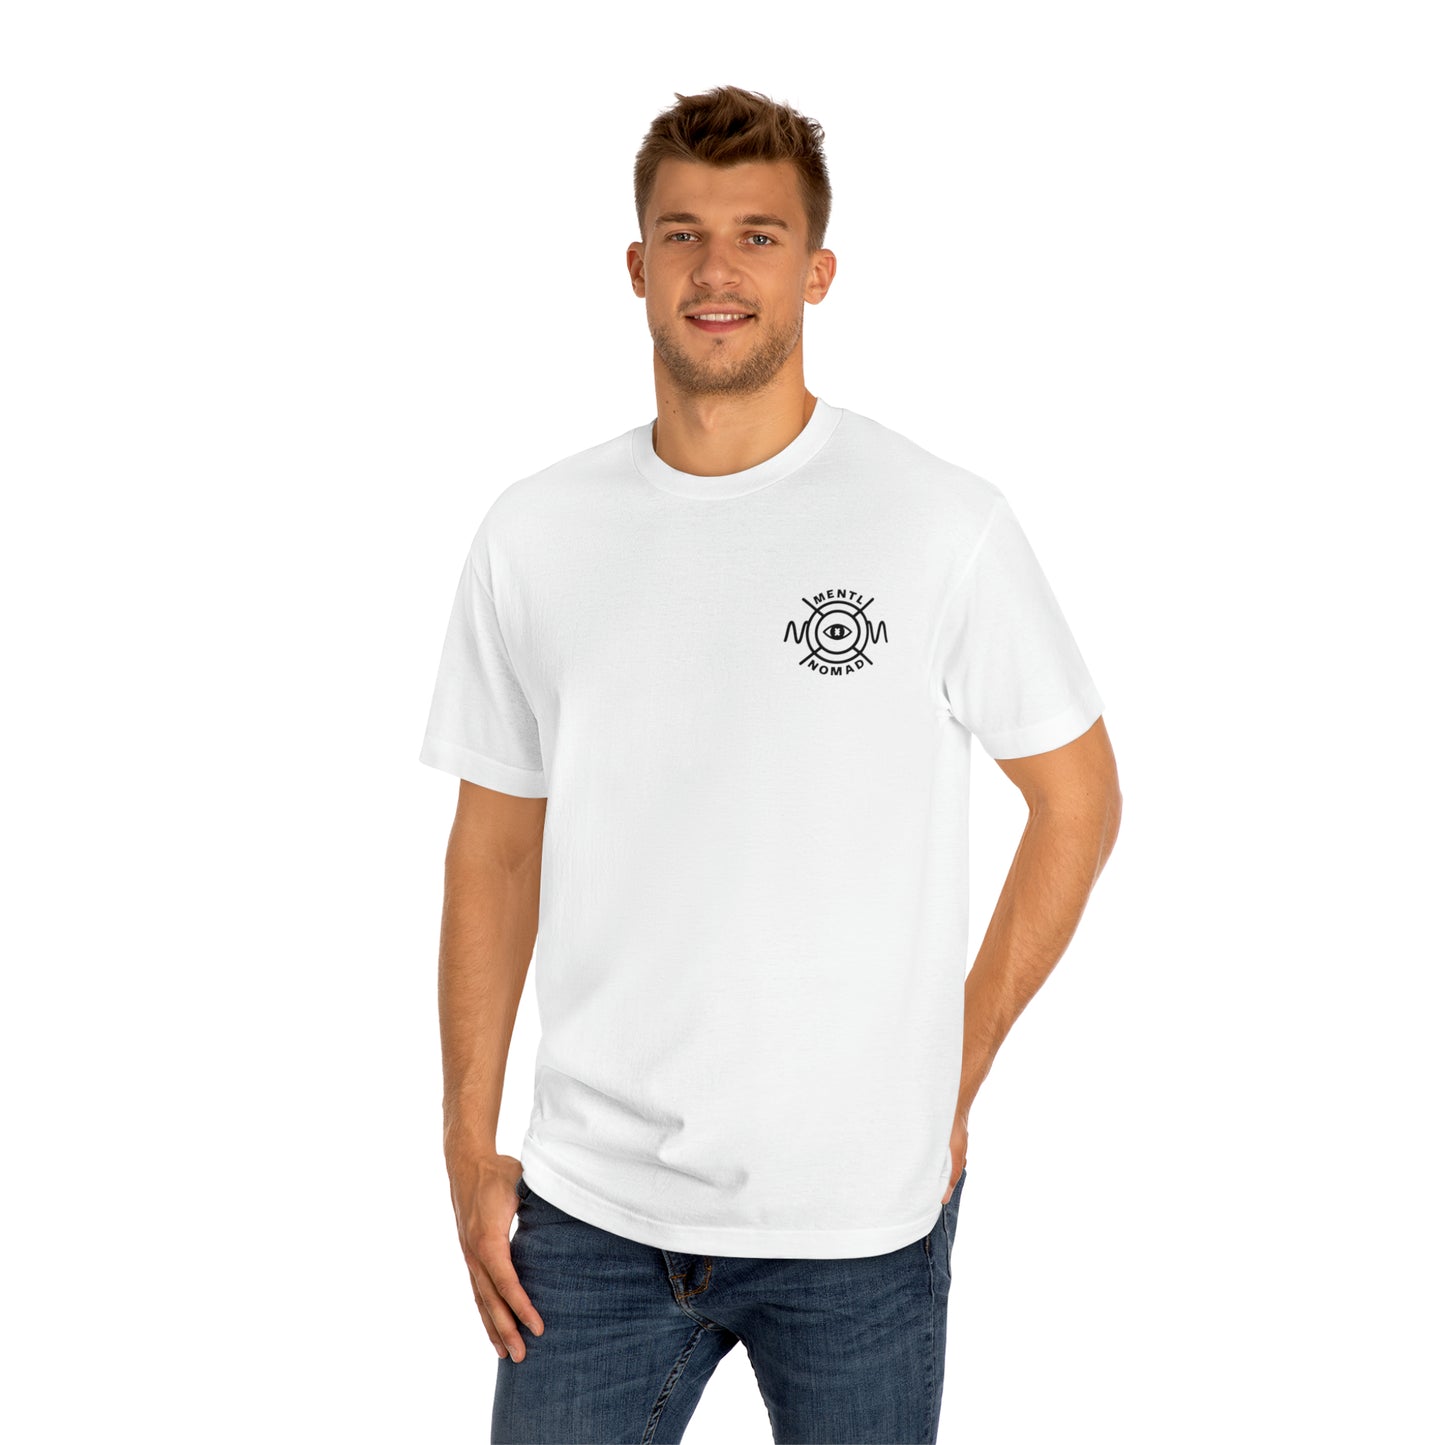 Mentl Nomad Crest (basics) T-Shirt